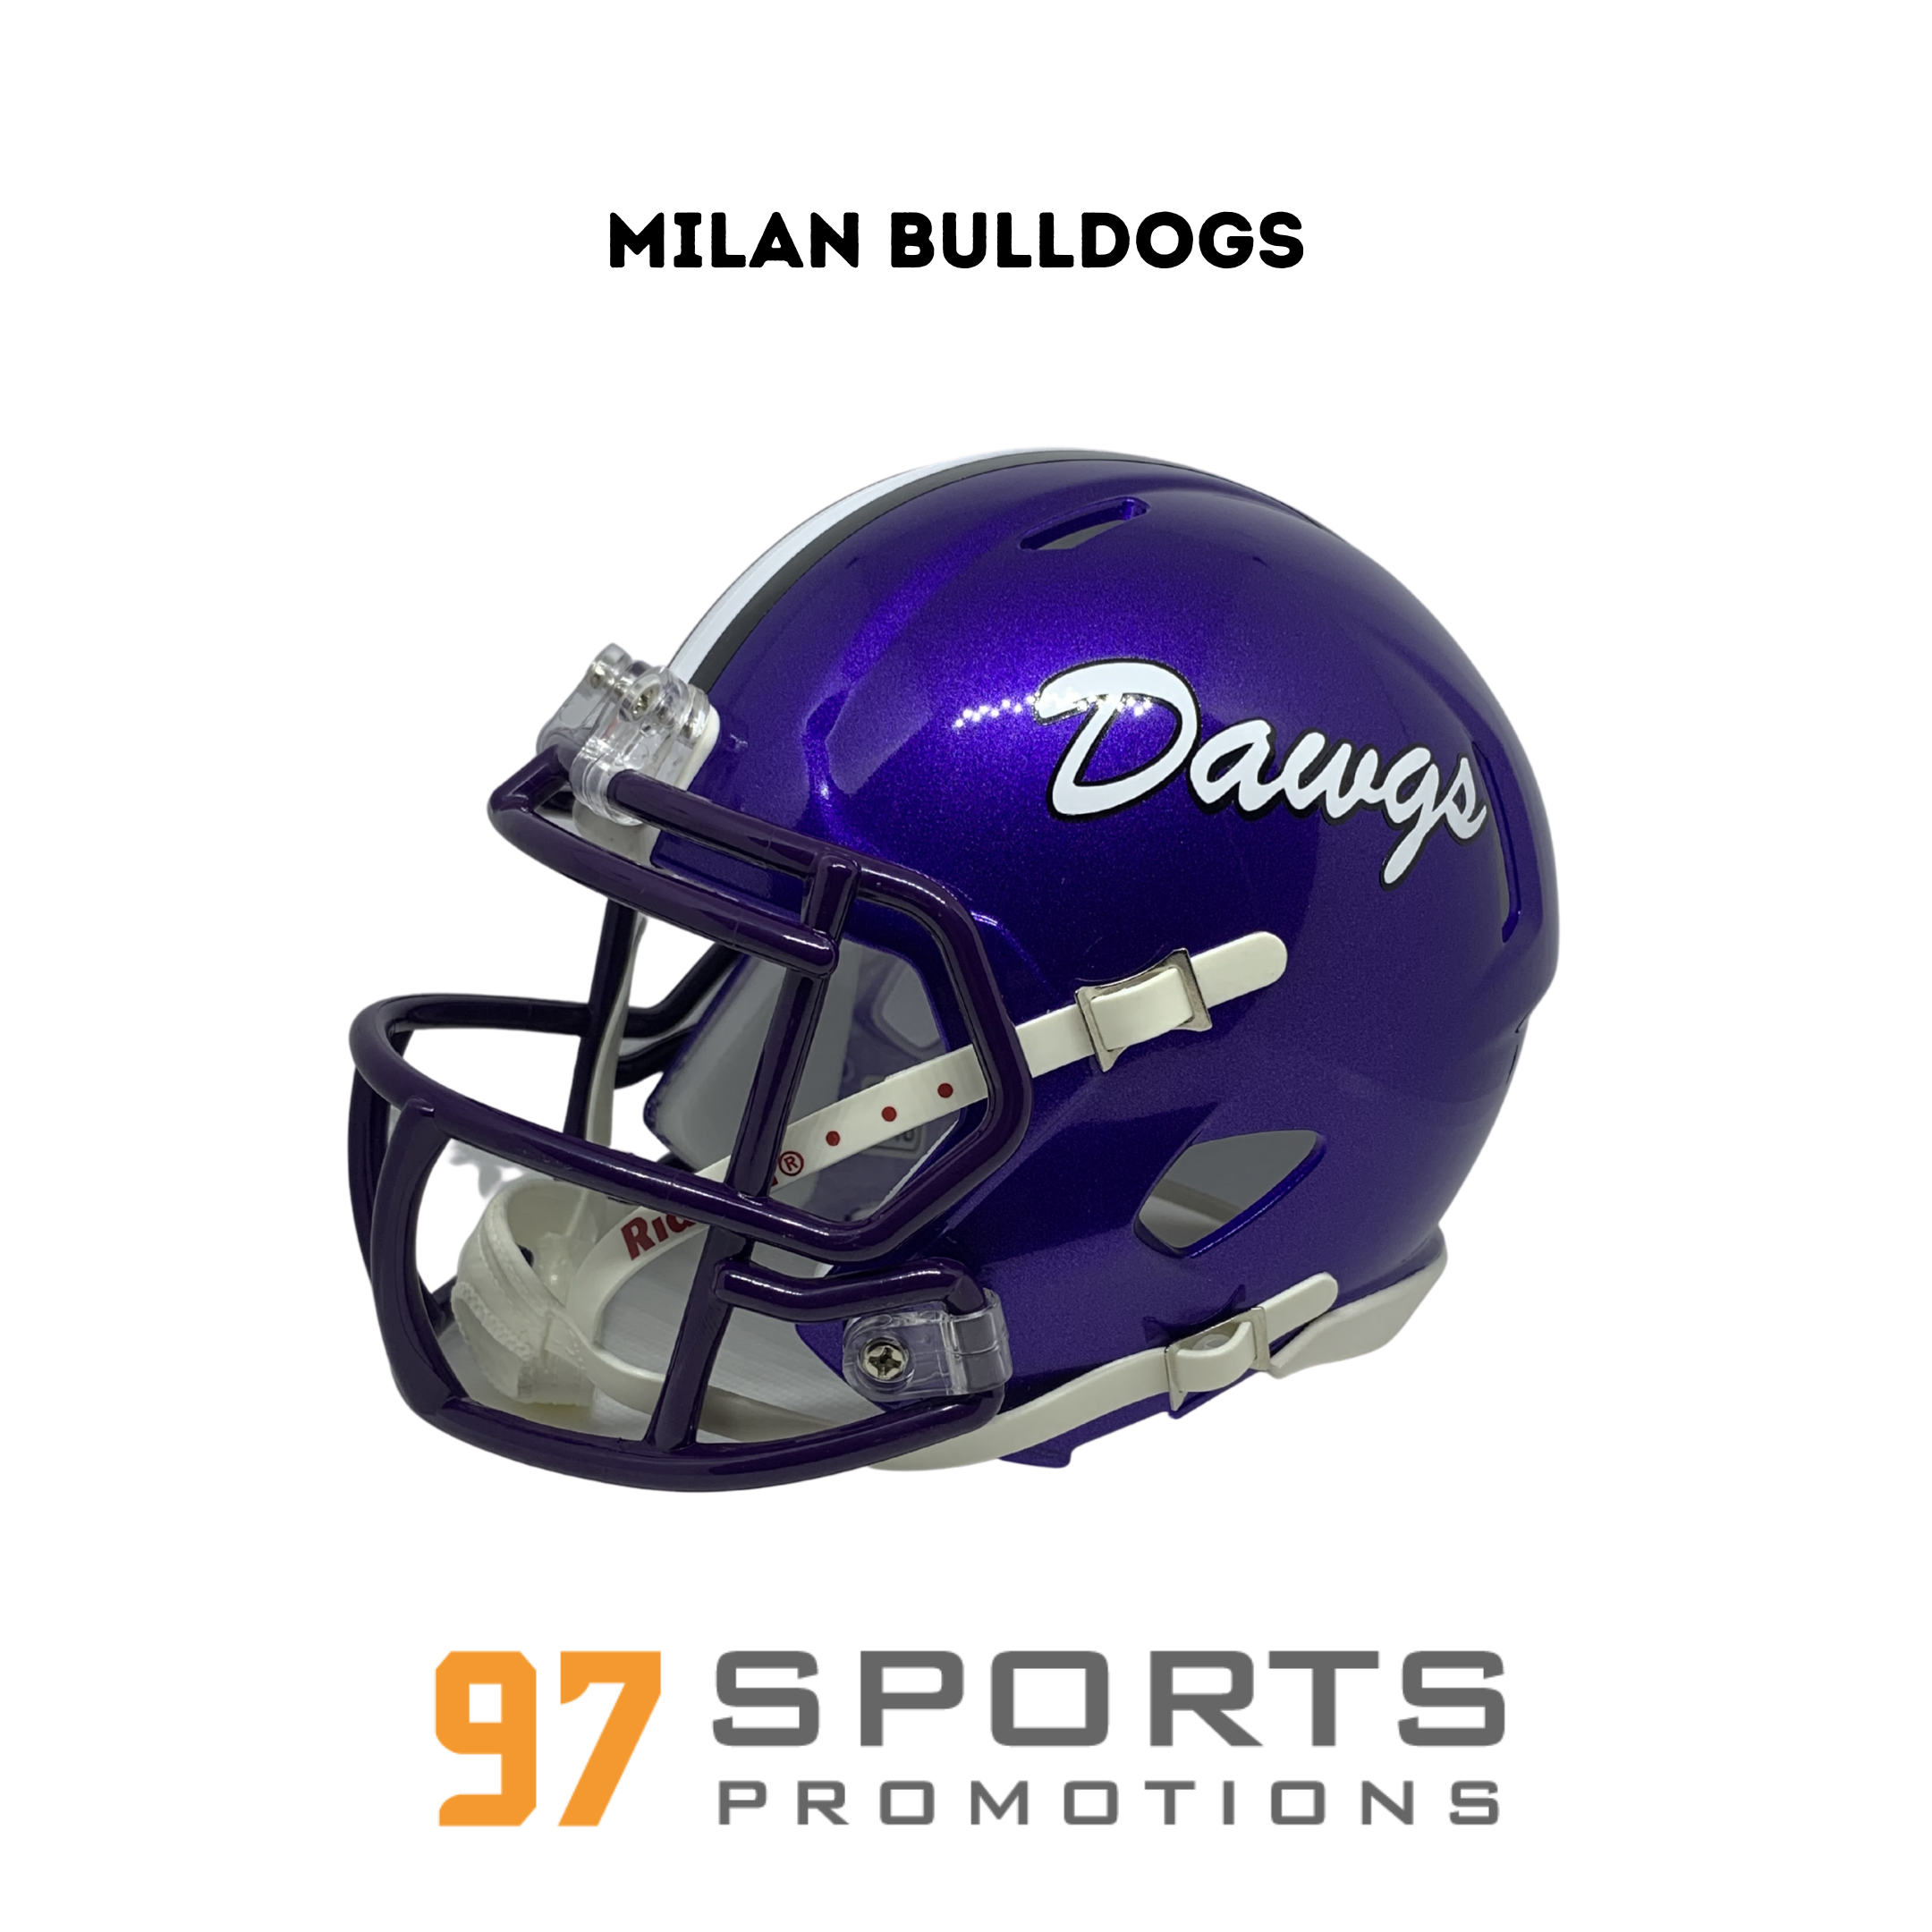 bulldog football helmet